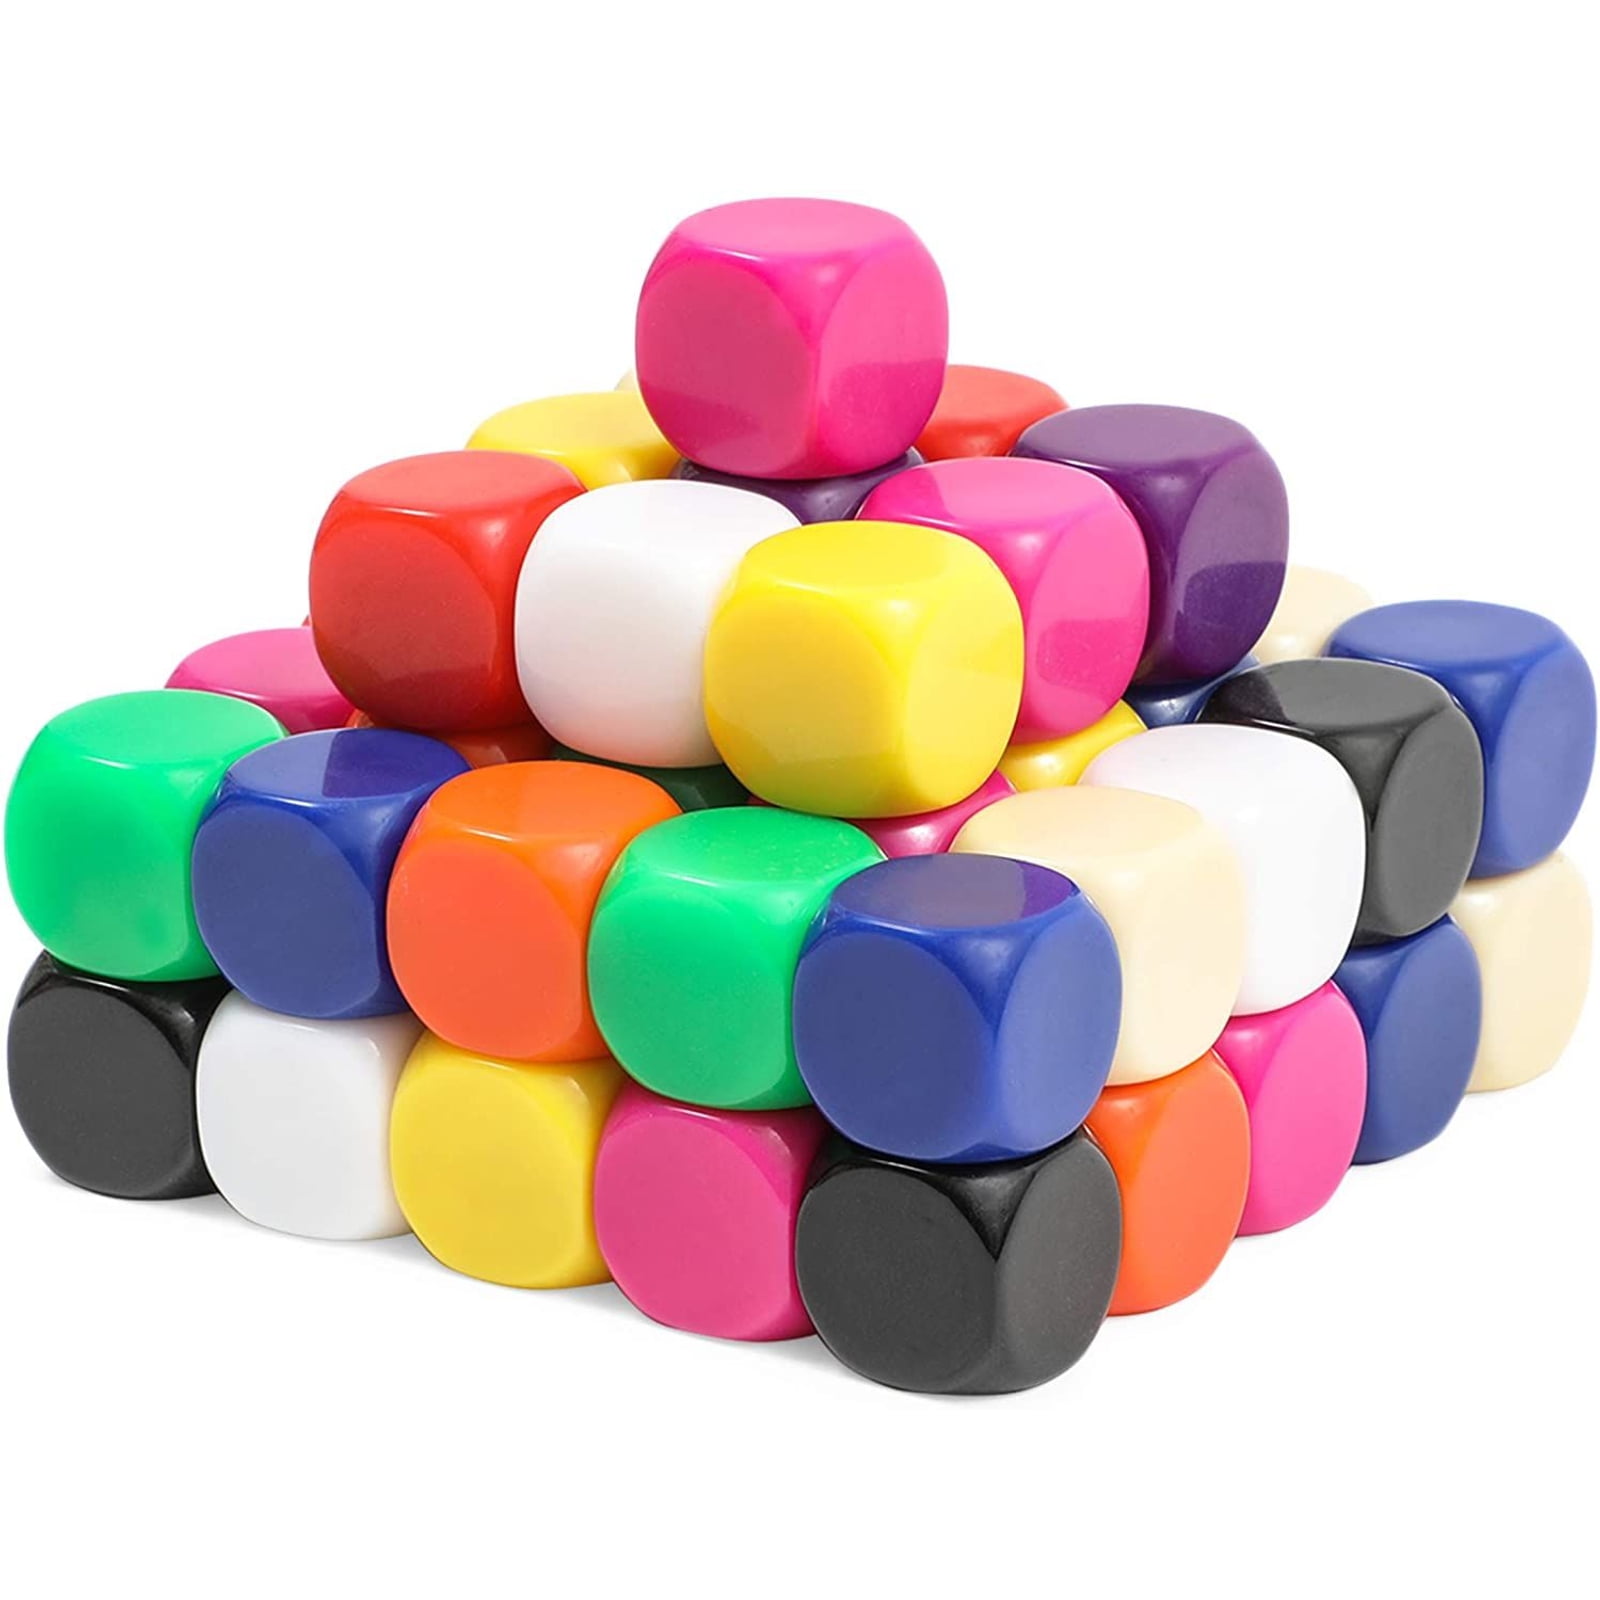 ! Hot 7pcs Blank People mini figures Different Colors Building Blocks Toys 